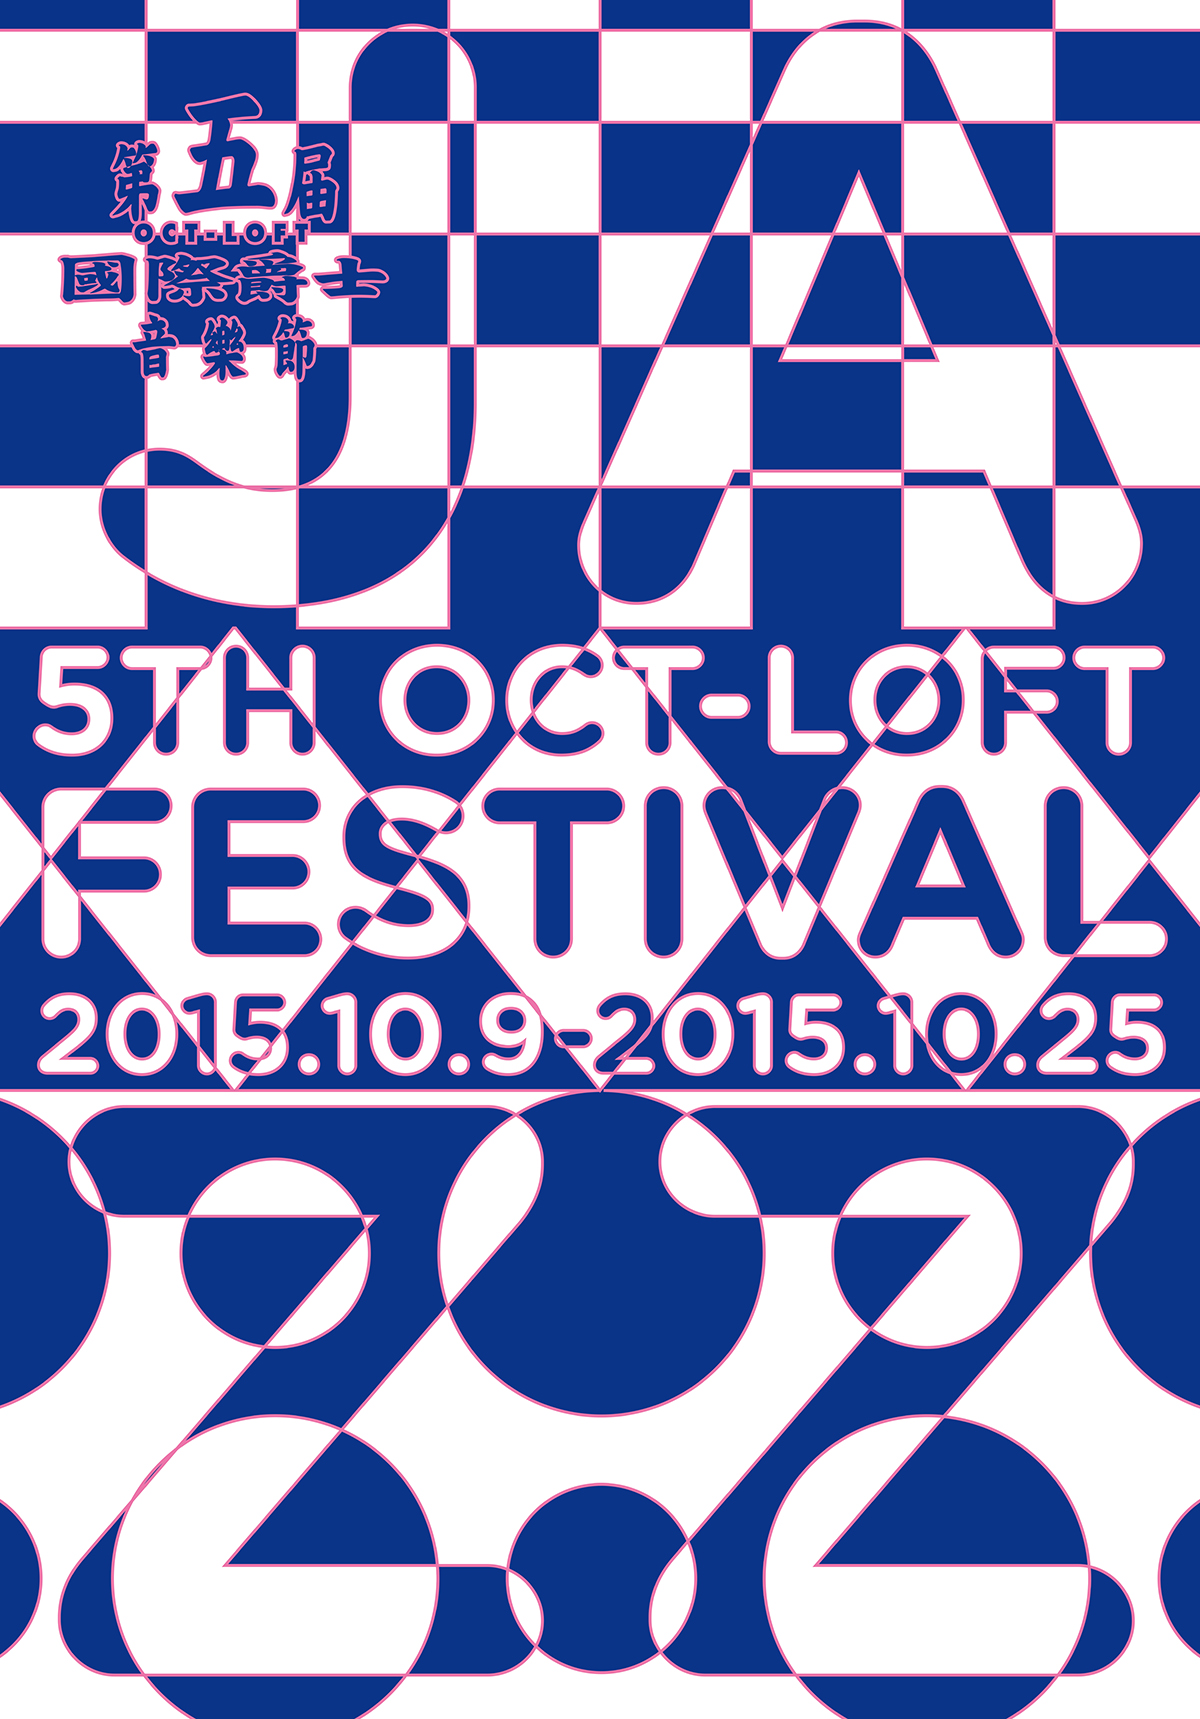 5th oct-loft jazz festival_方案三